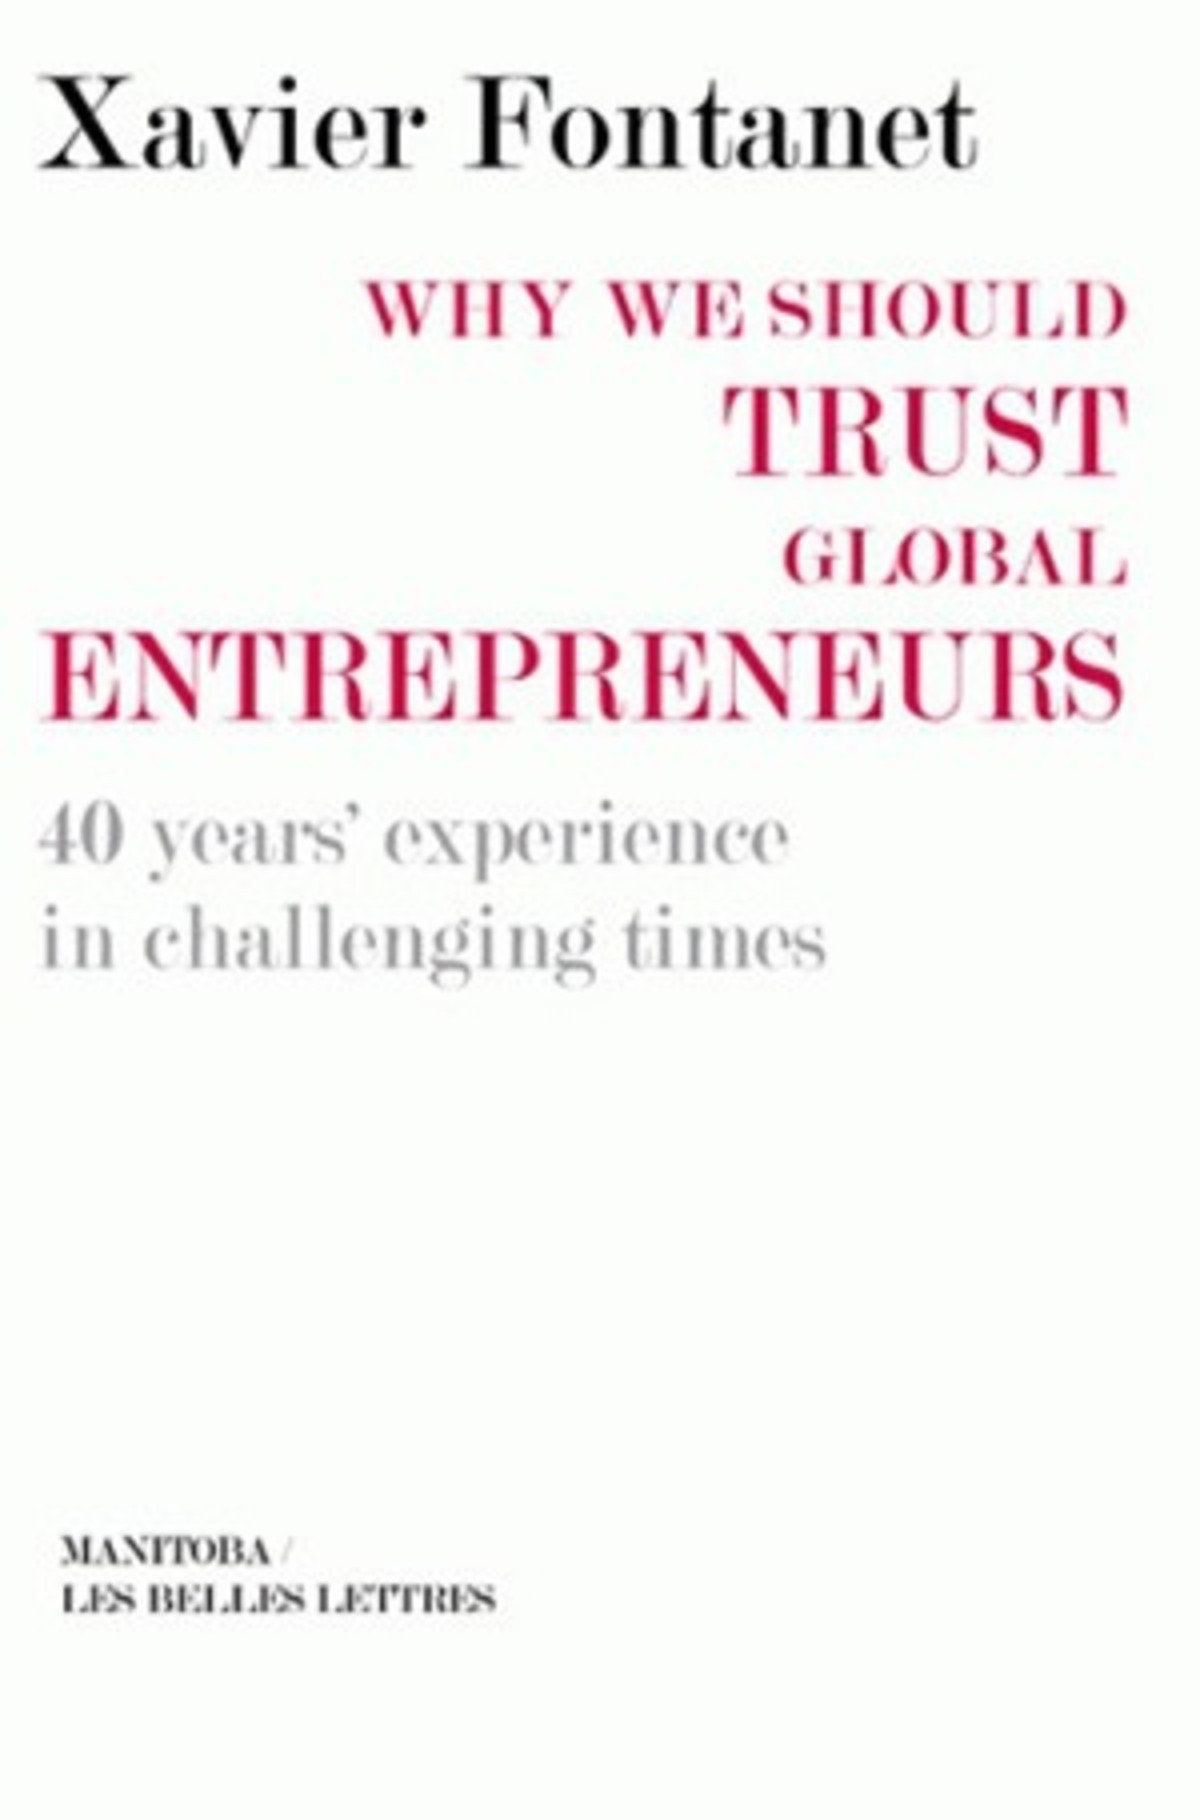 Why we should trust global entrepreneurs